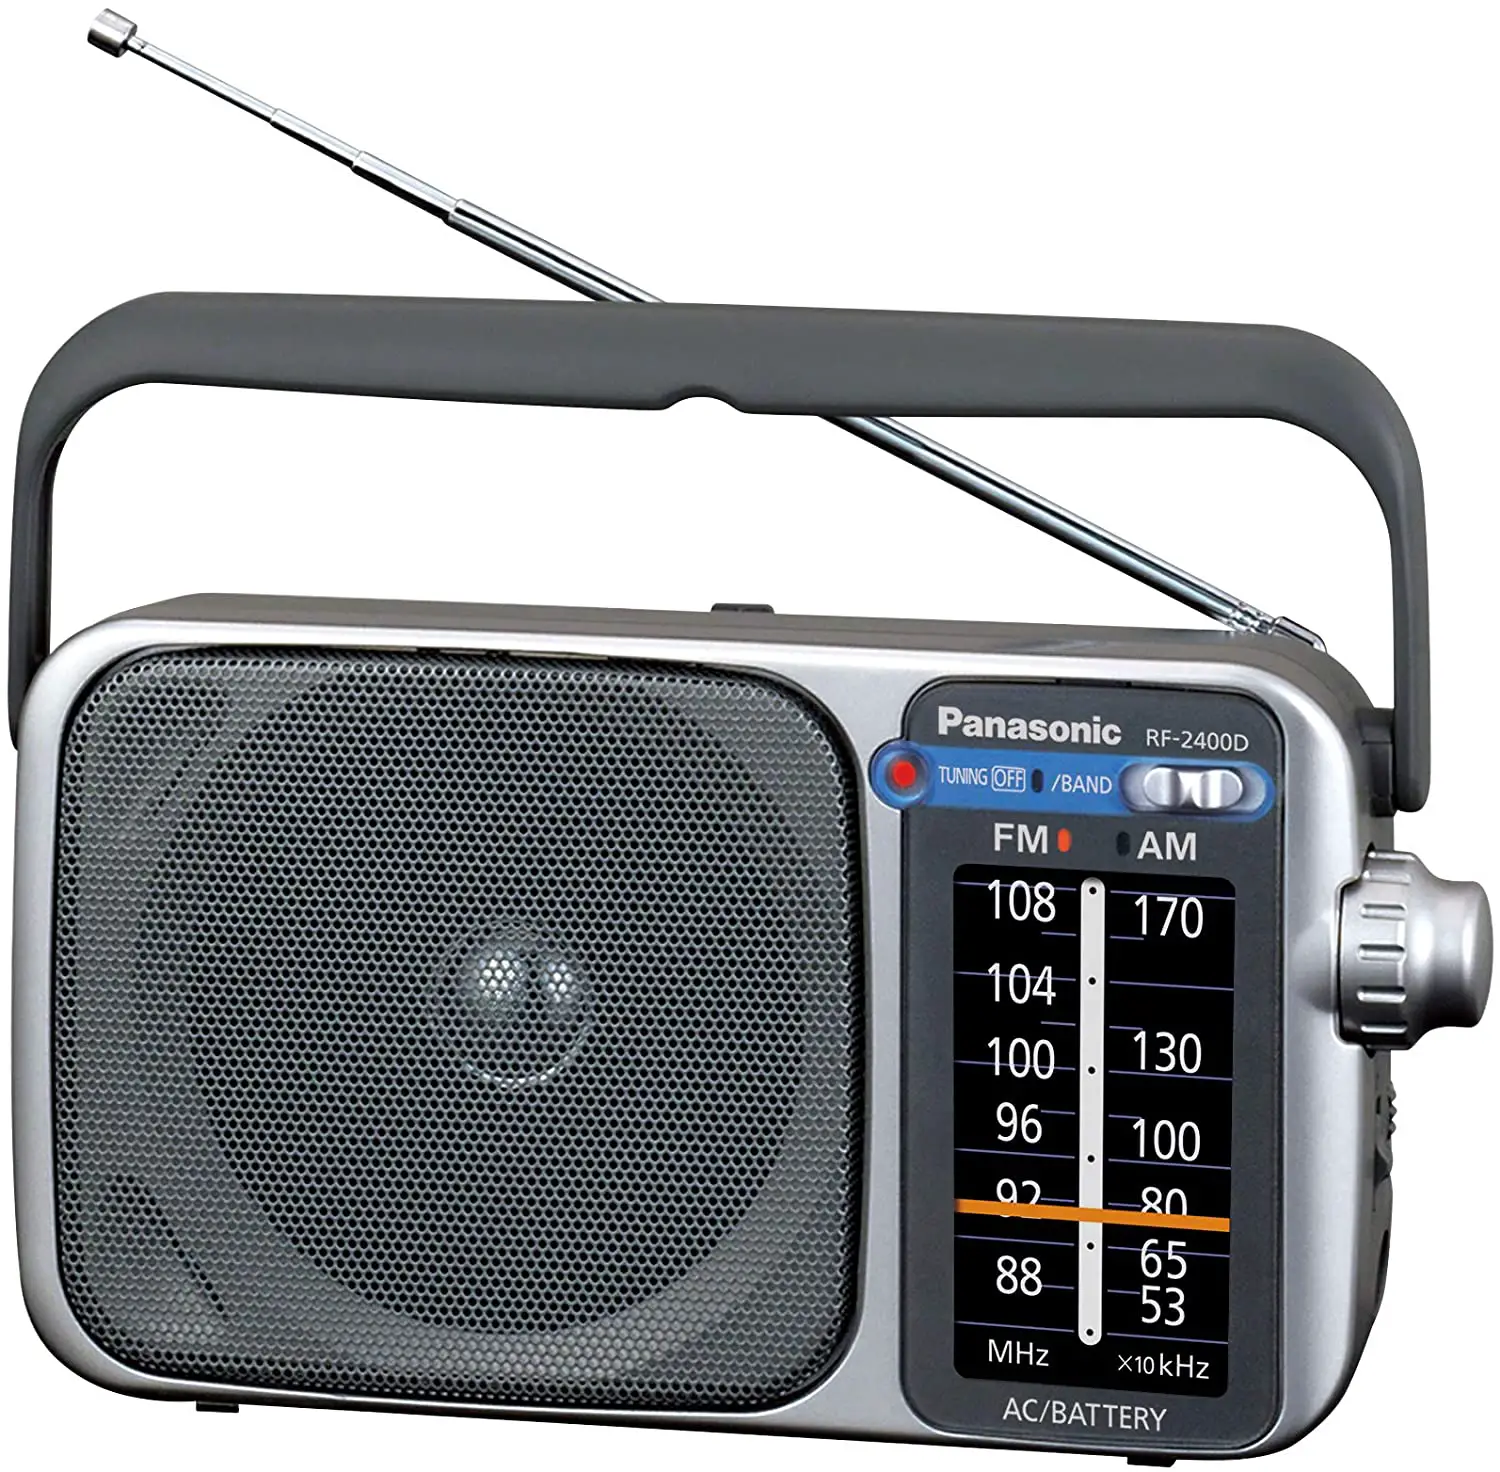 Panasonic Portable AM / FM Radio for Camping